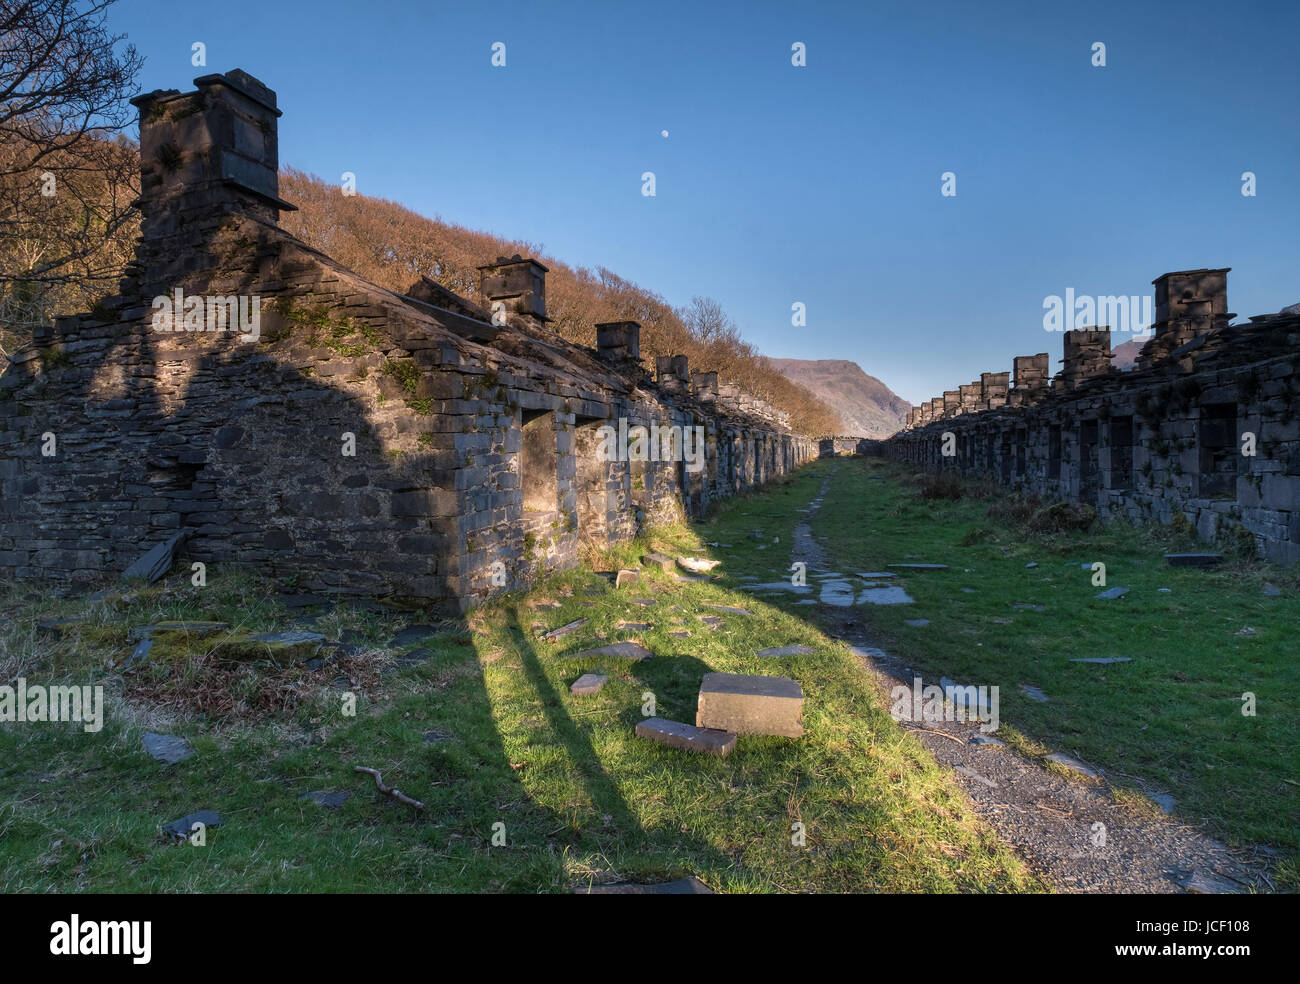 Abandoned Anglesey Barracks, The Quarrymans Path, Dinorwic Slate Quarry, Snowdonia National Park, North Wales, UK Stock Photo